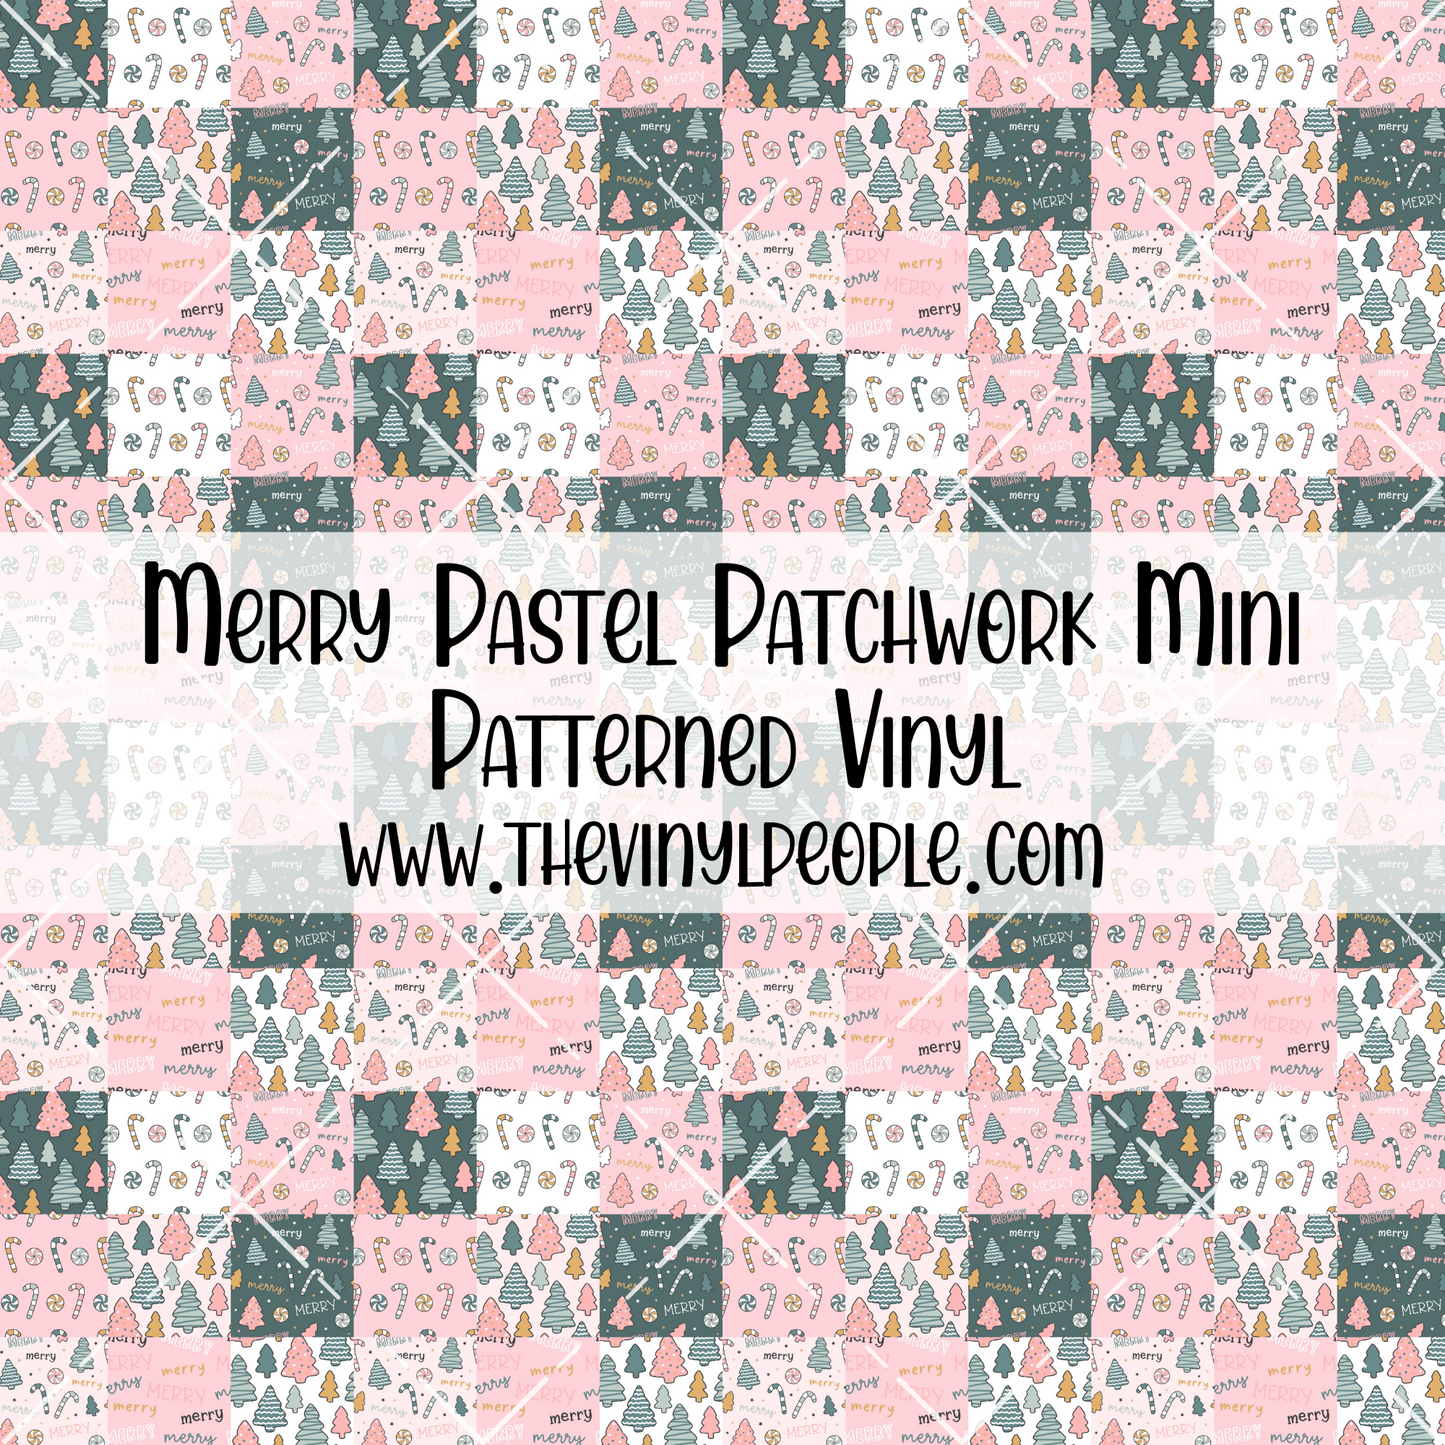 Merry Pastel Patchwork Patterned Vinyl